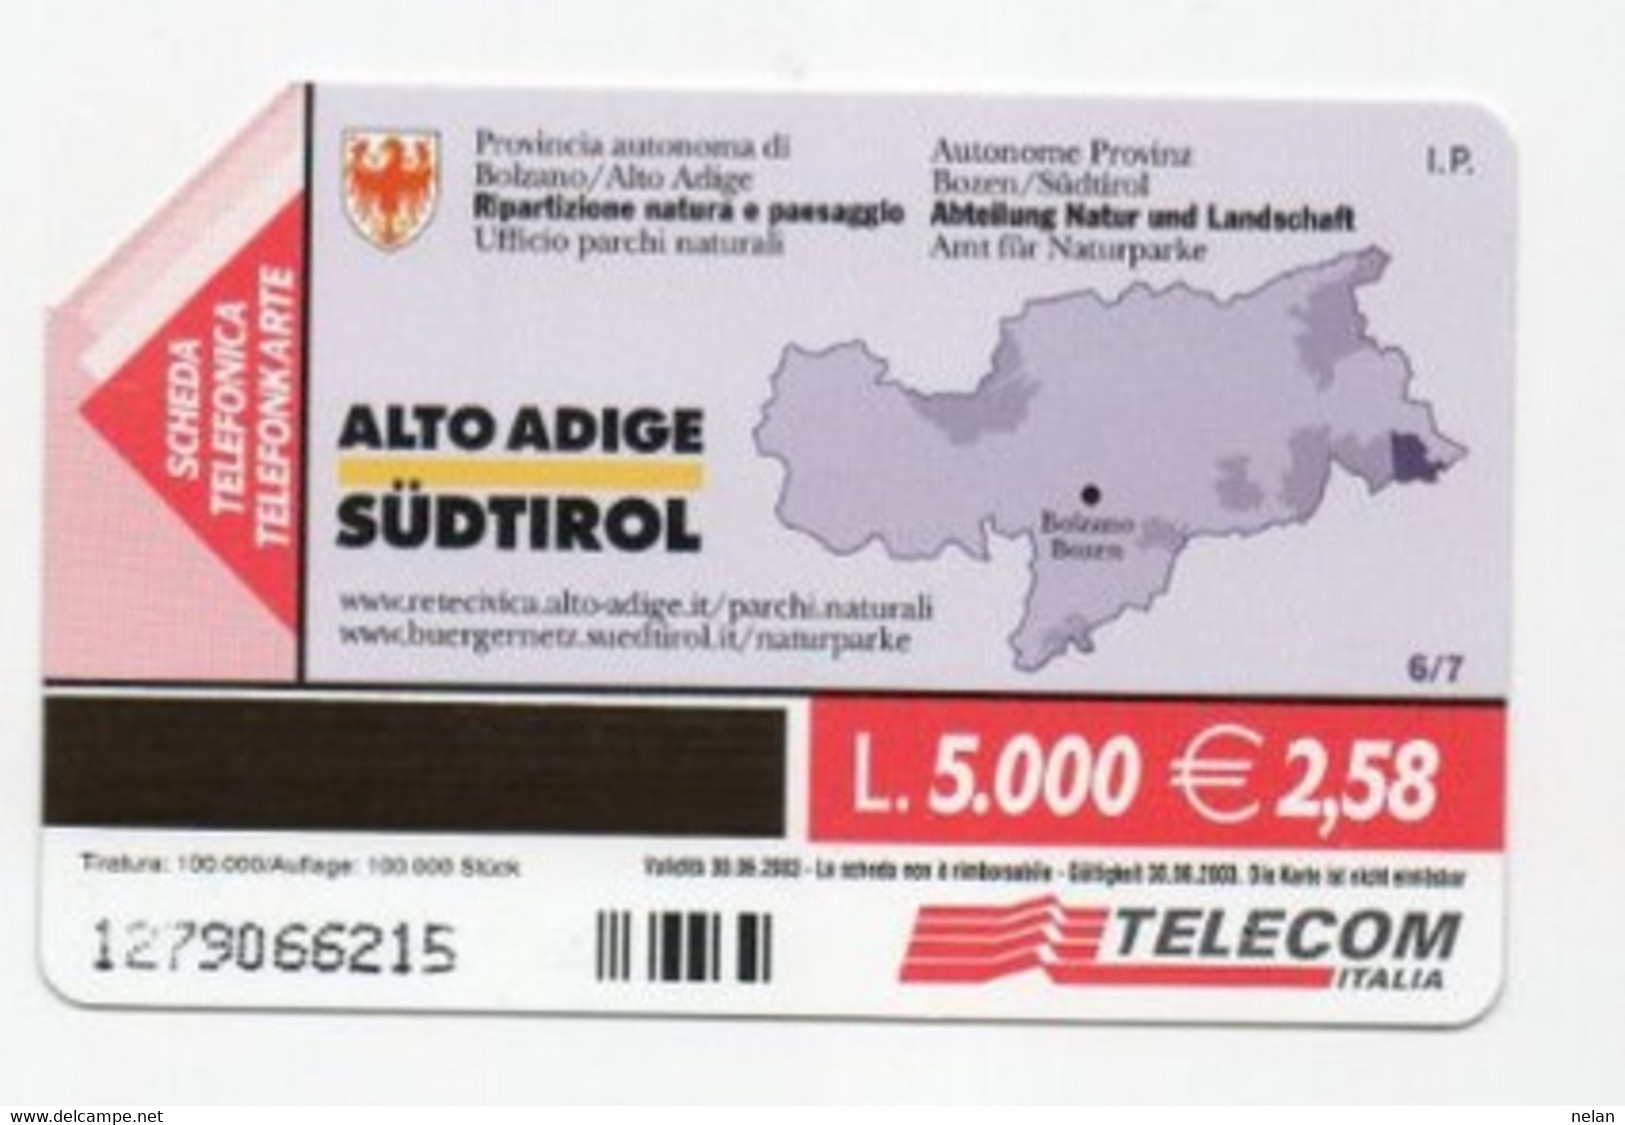 SCHEDA TELEFONICA - PHONE CARD - ITALIA - TELECOM - ALTO ADIGE - Mountains